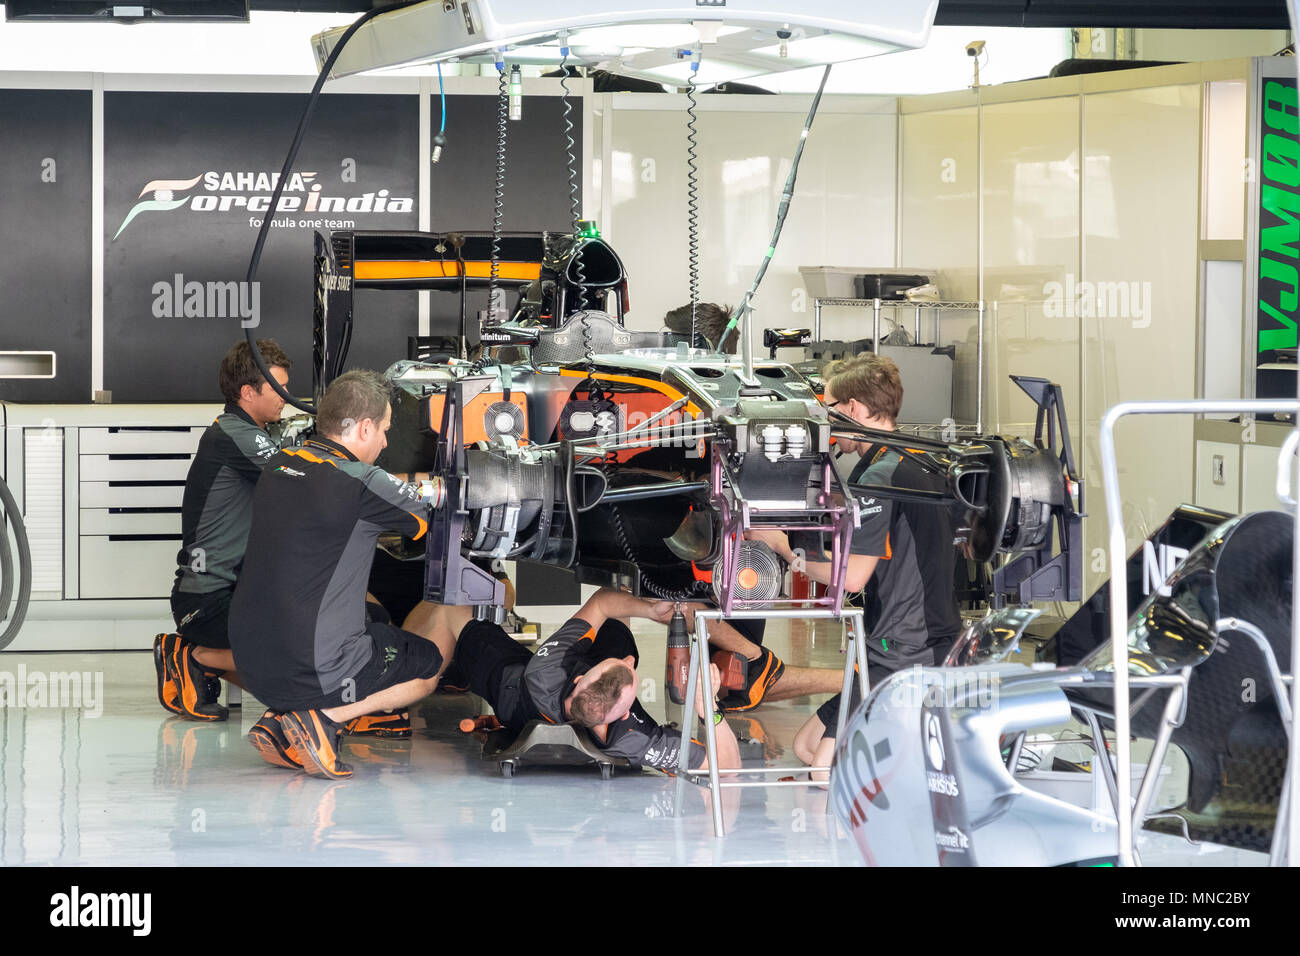 Force India mechanics preparing their car for the Abu Dhabi grand prix Stock Photo